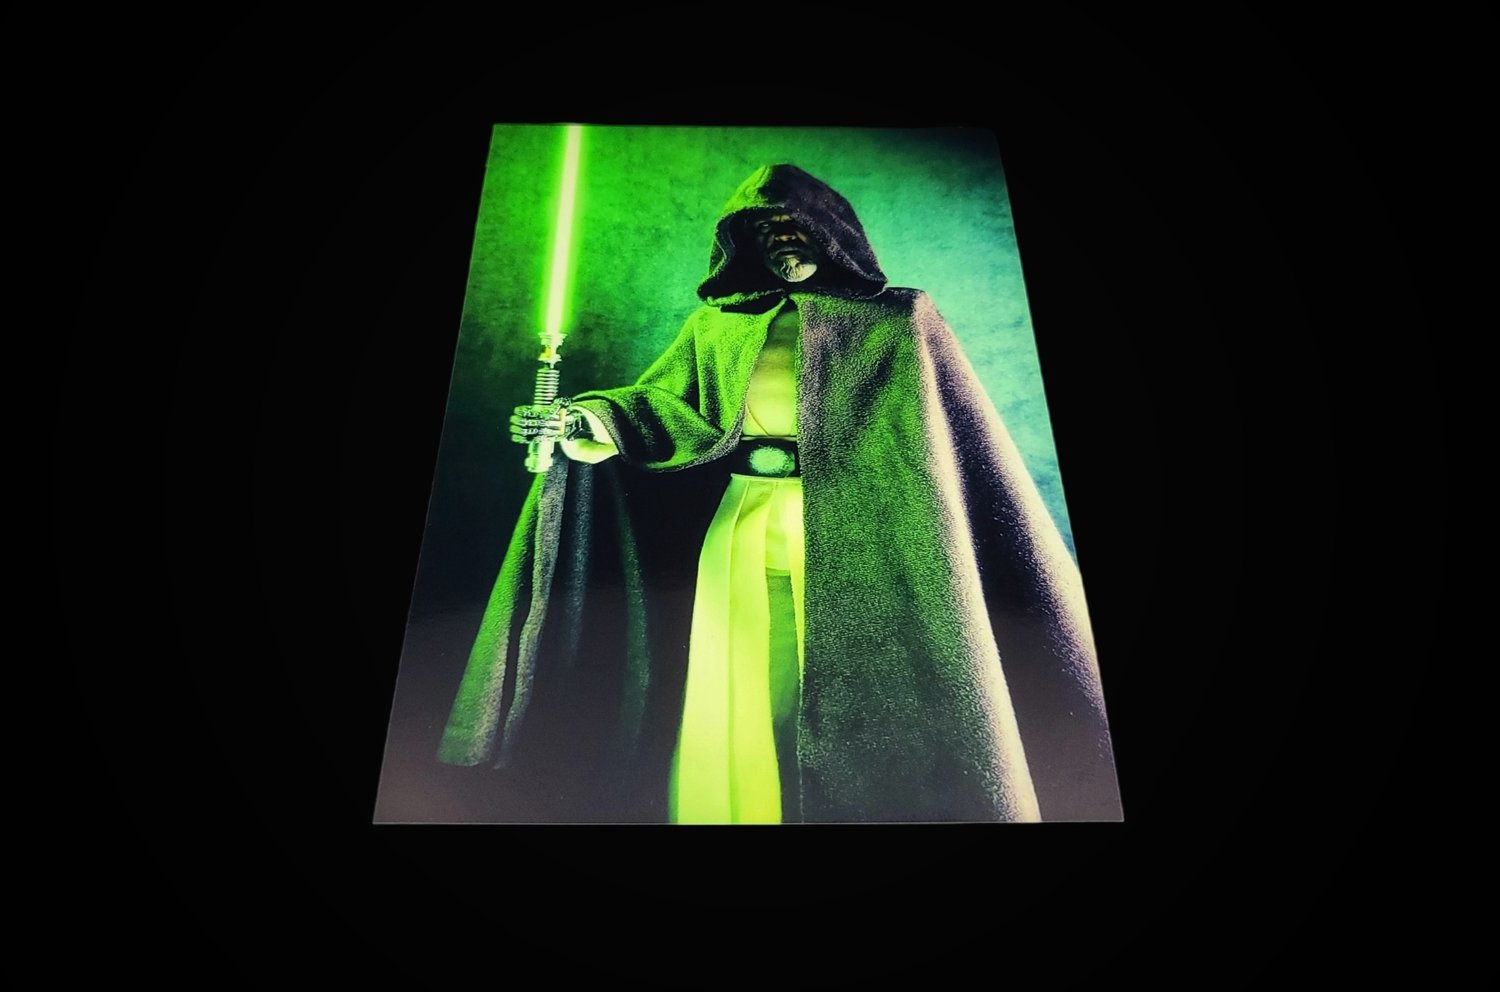 The Jedi Master™ Art Print by Art Brand Studios